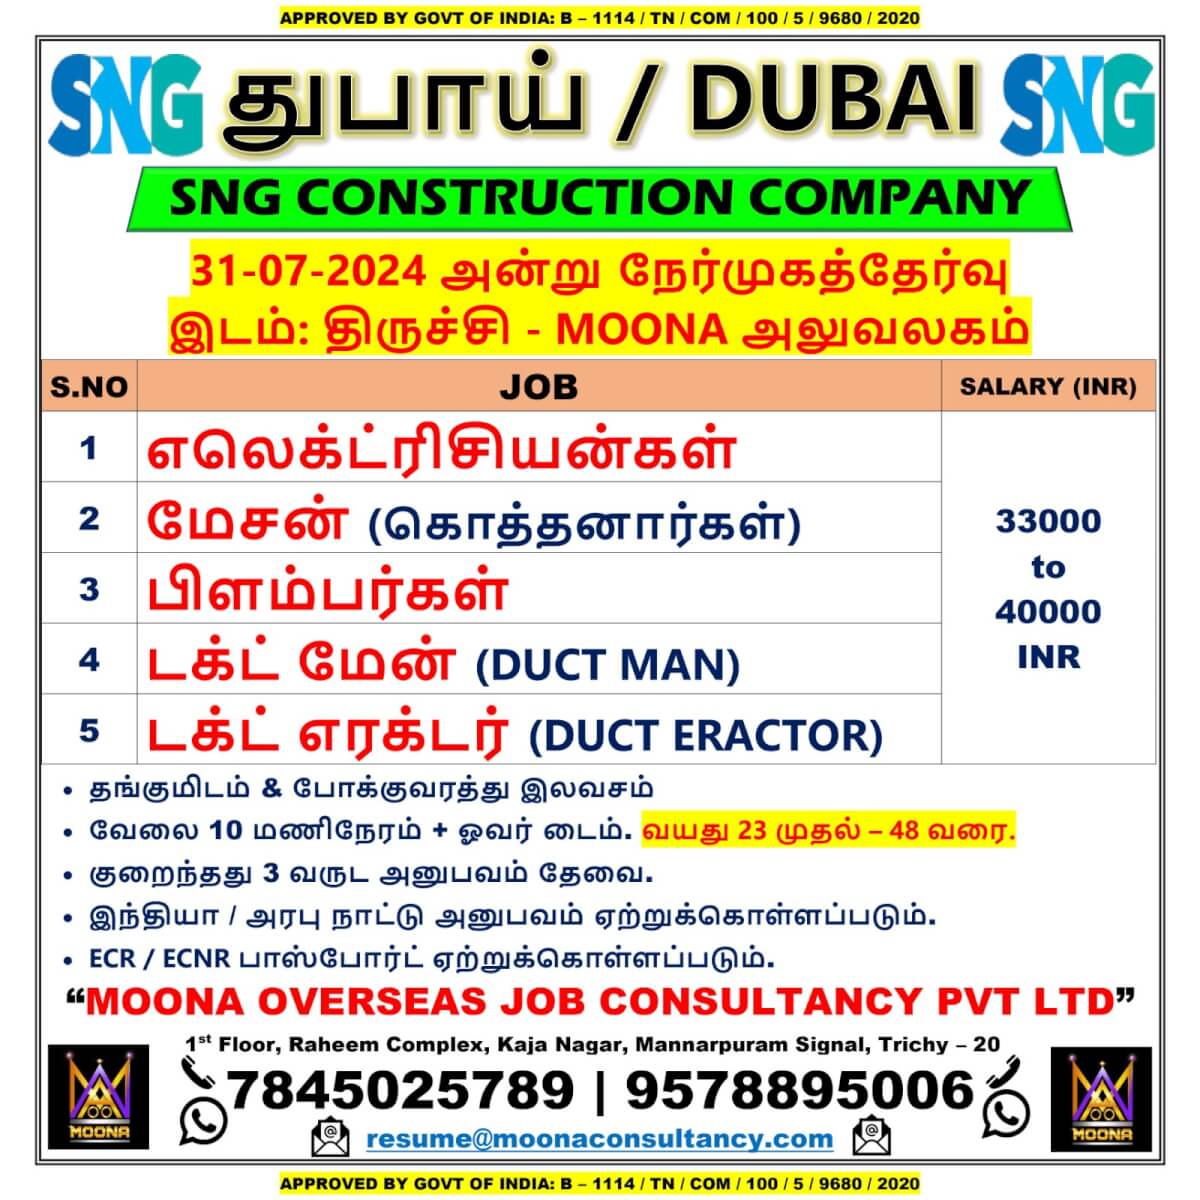 DUBAI SNG CONSTRUCTION COMPANY VACANCY